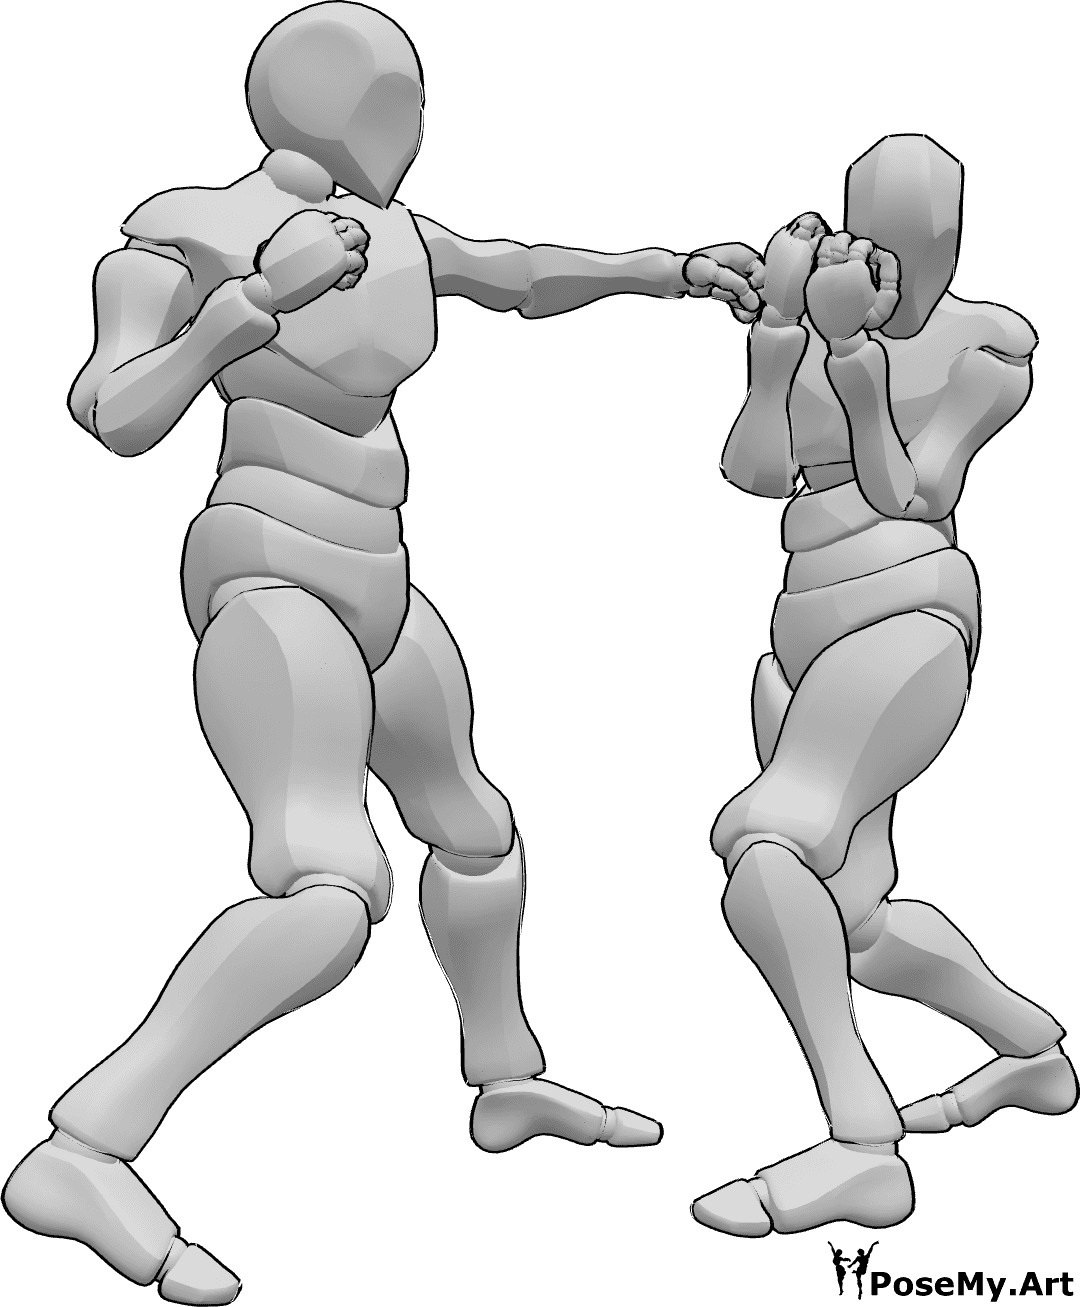 Boxers 1 by LuigiL on DeviantArt